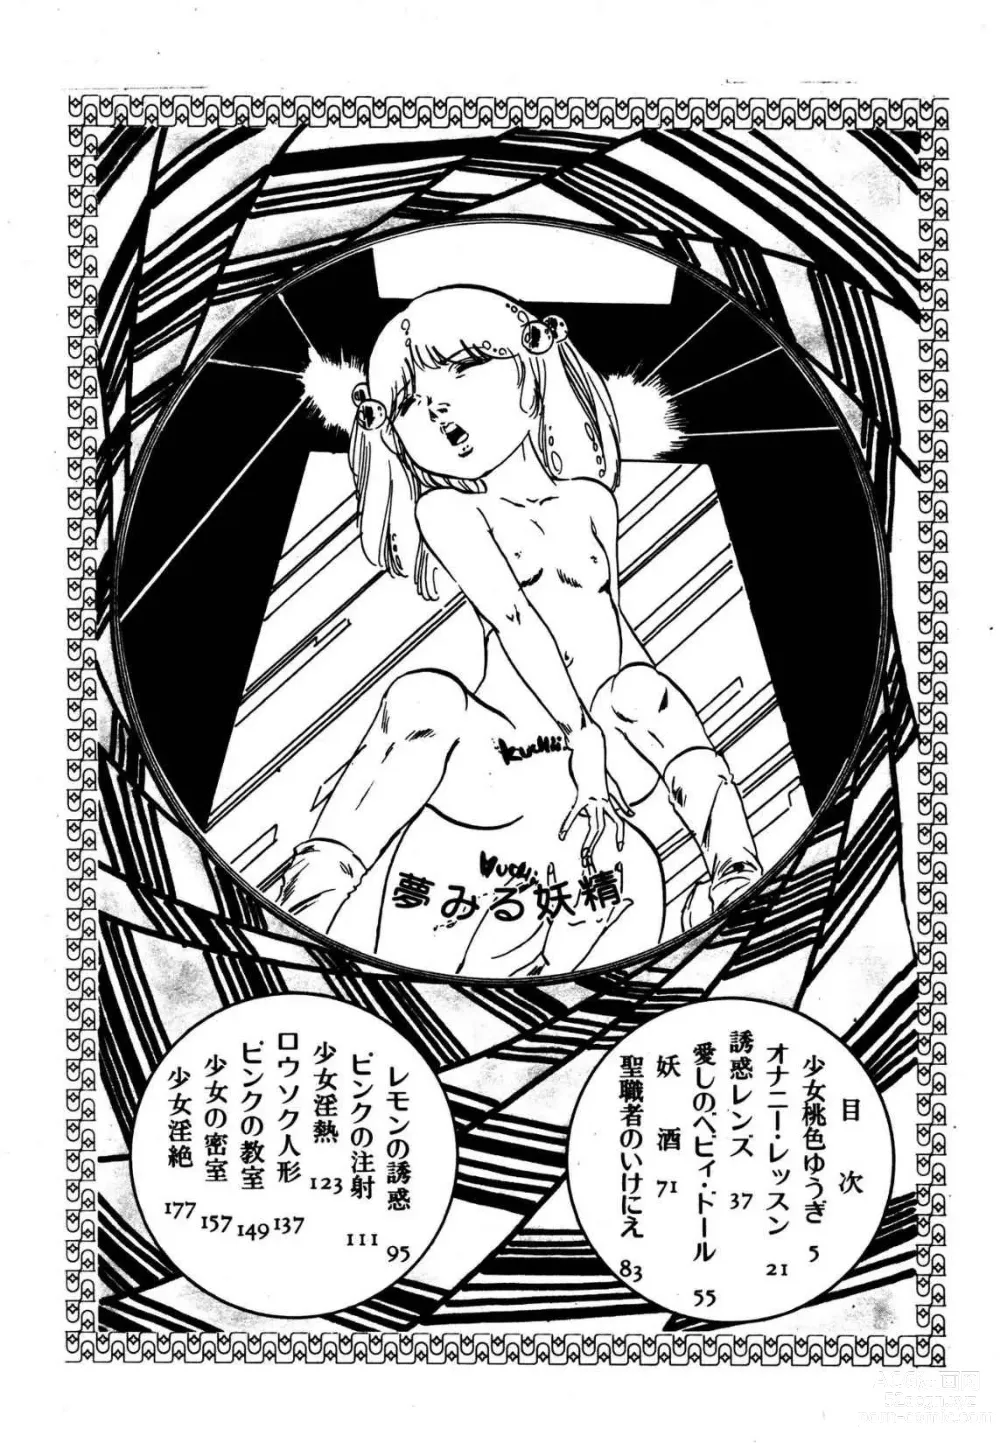 Page 4 of manga Dreaming fairy